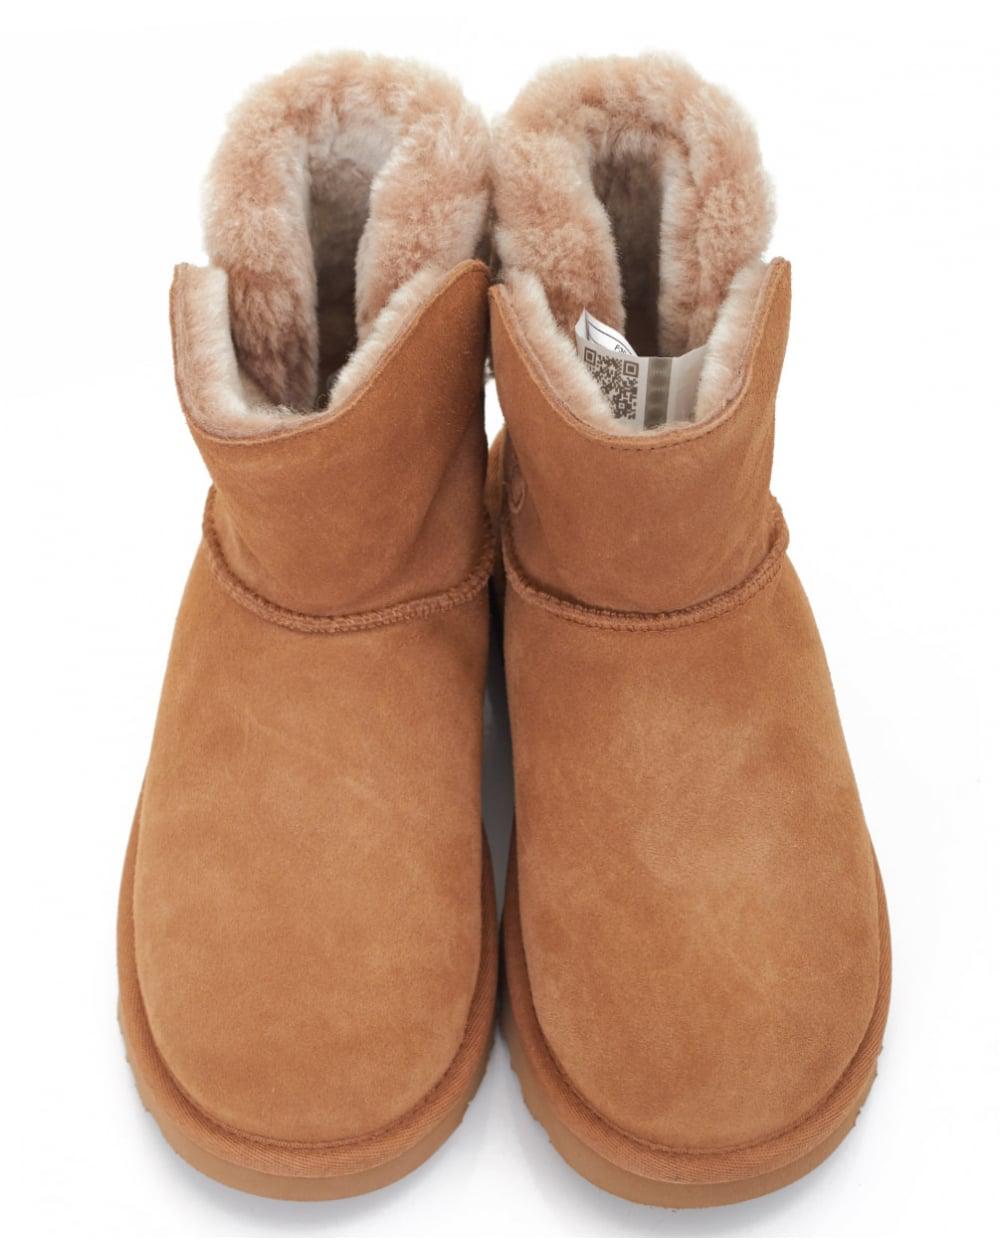 adria sheepskin boots